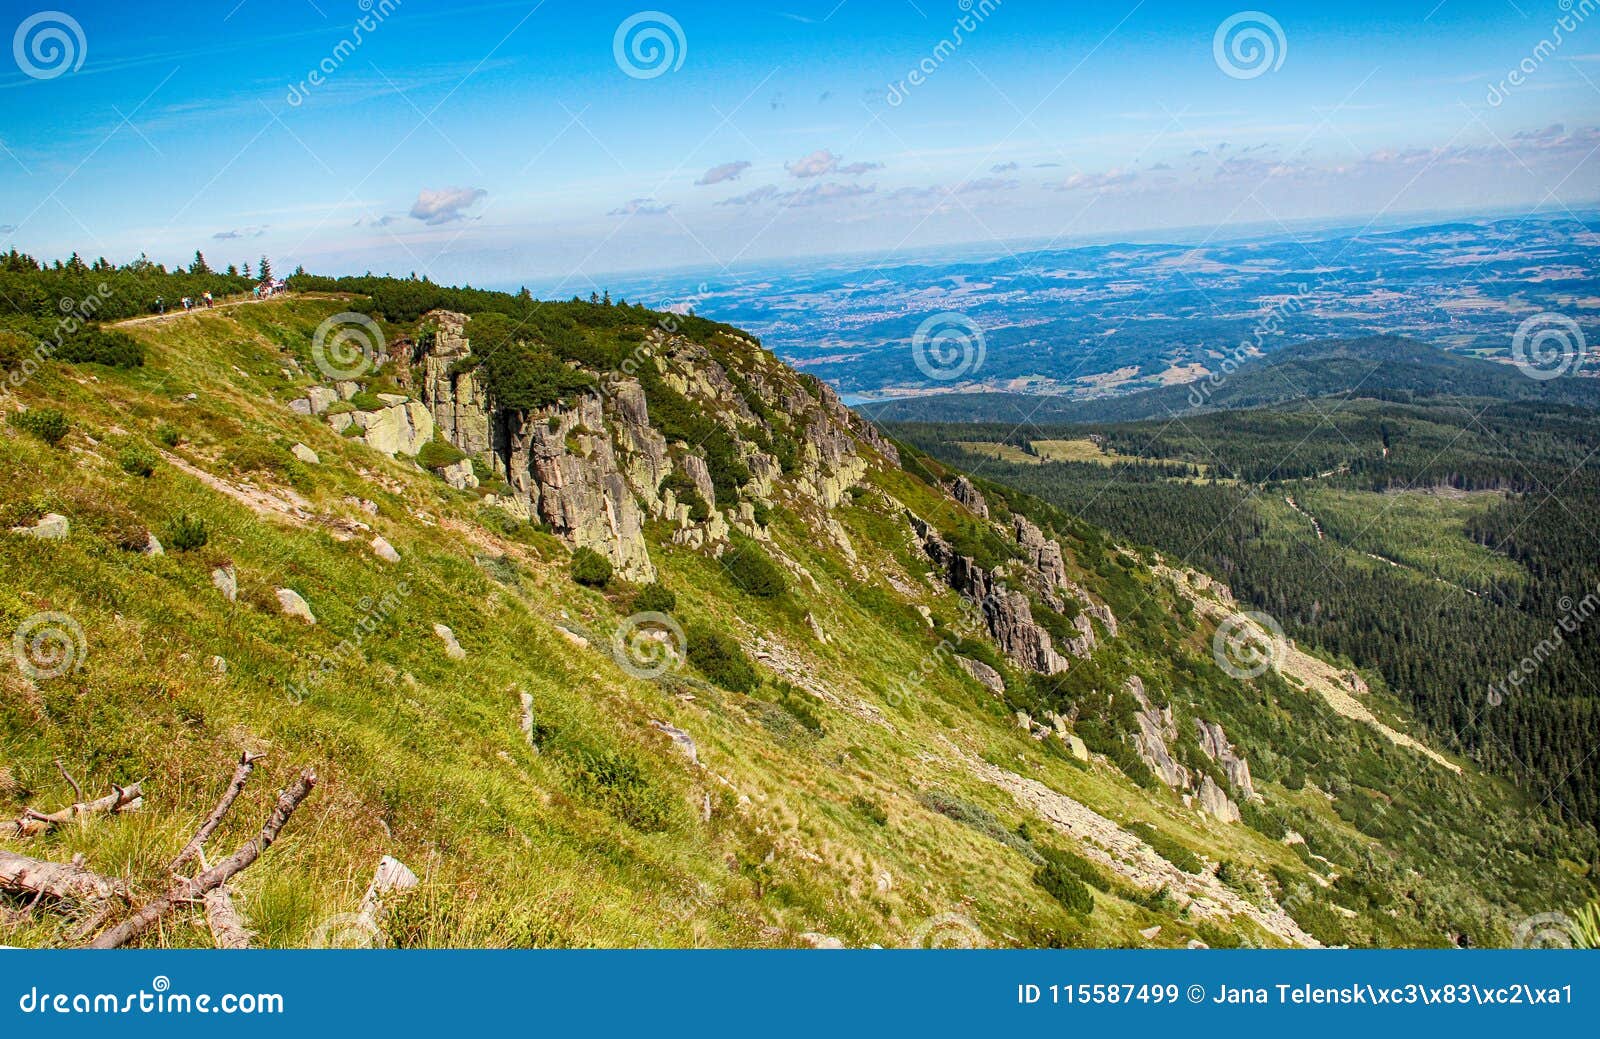 the path of czech-polish friendship- czech republic giant mountains